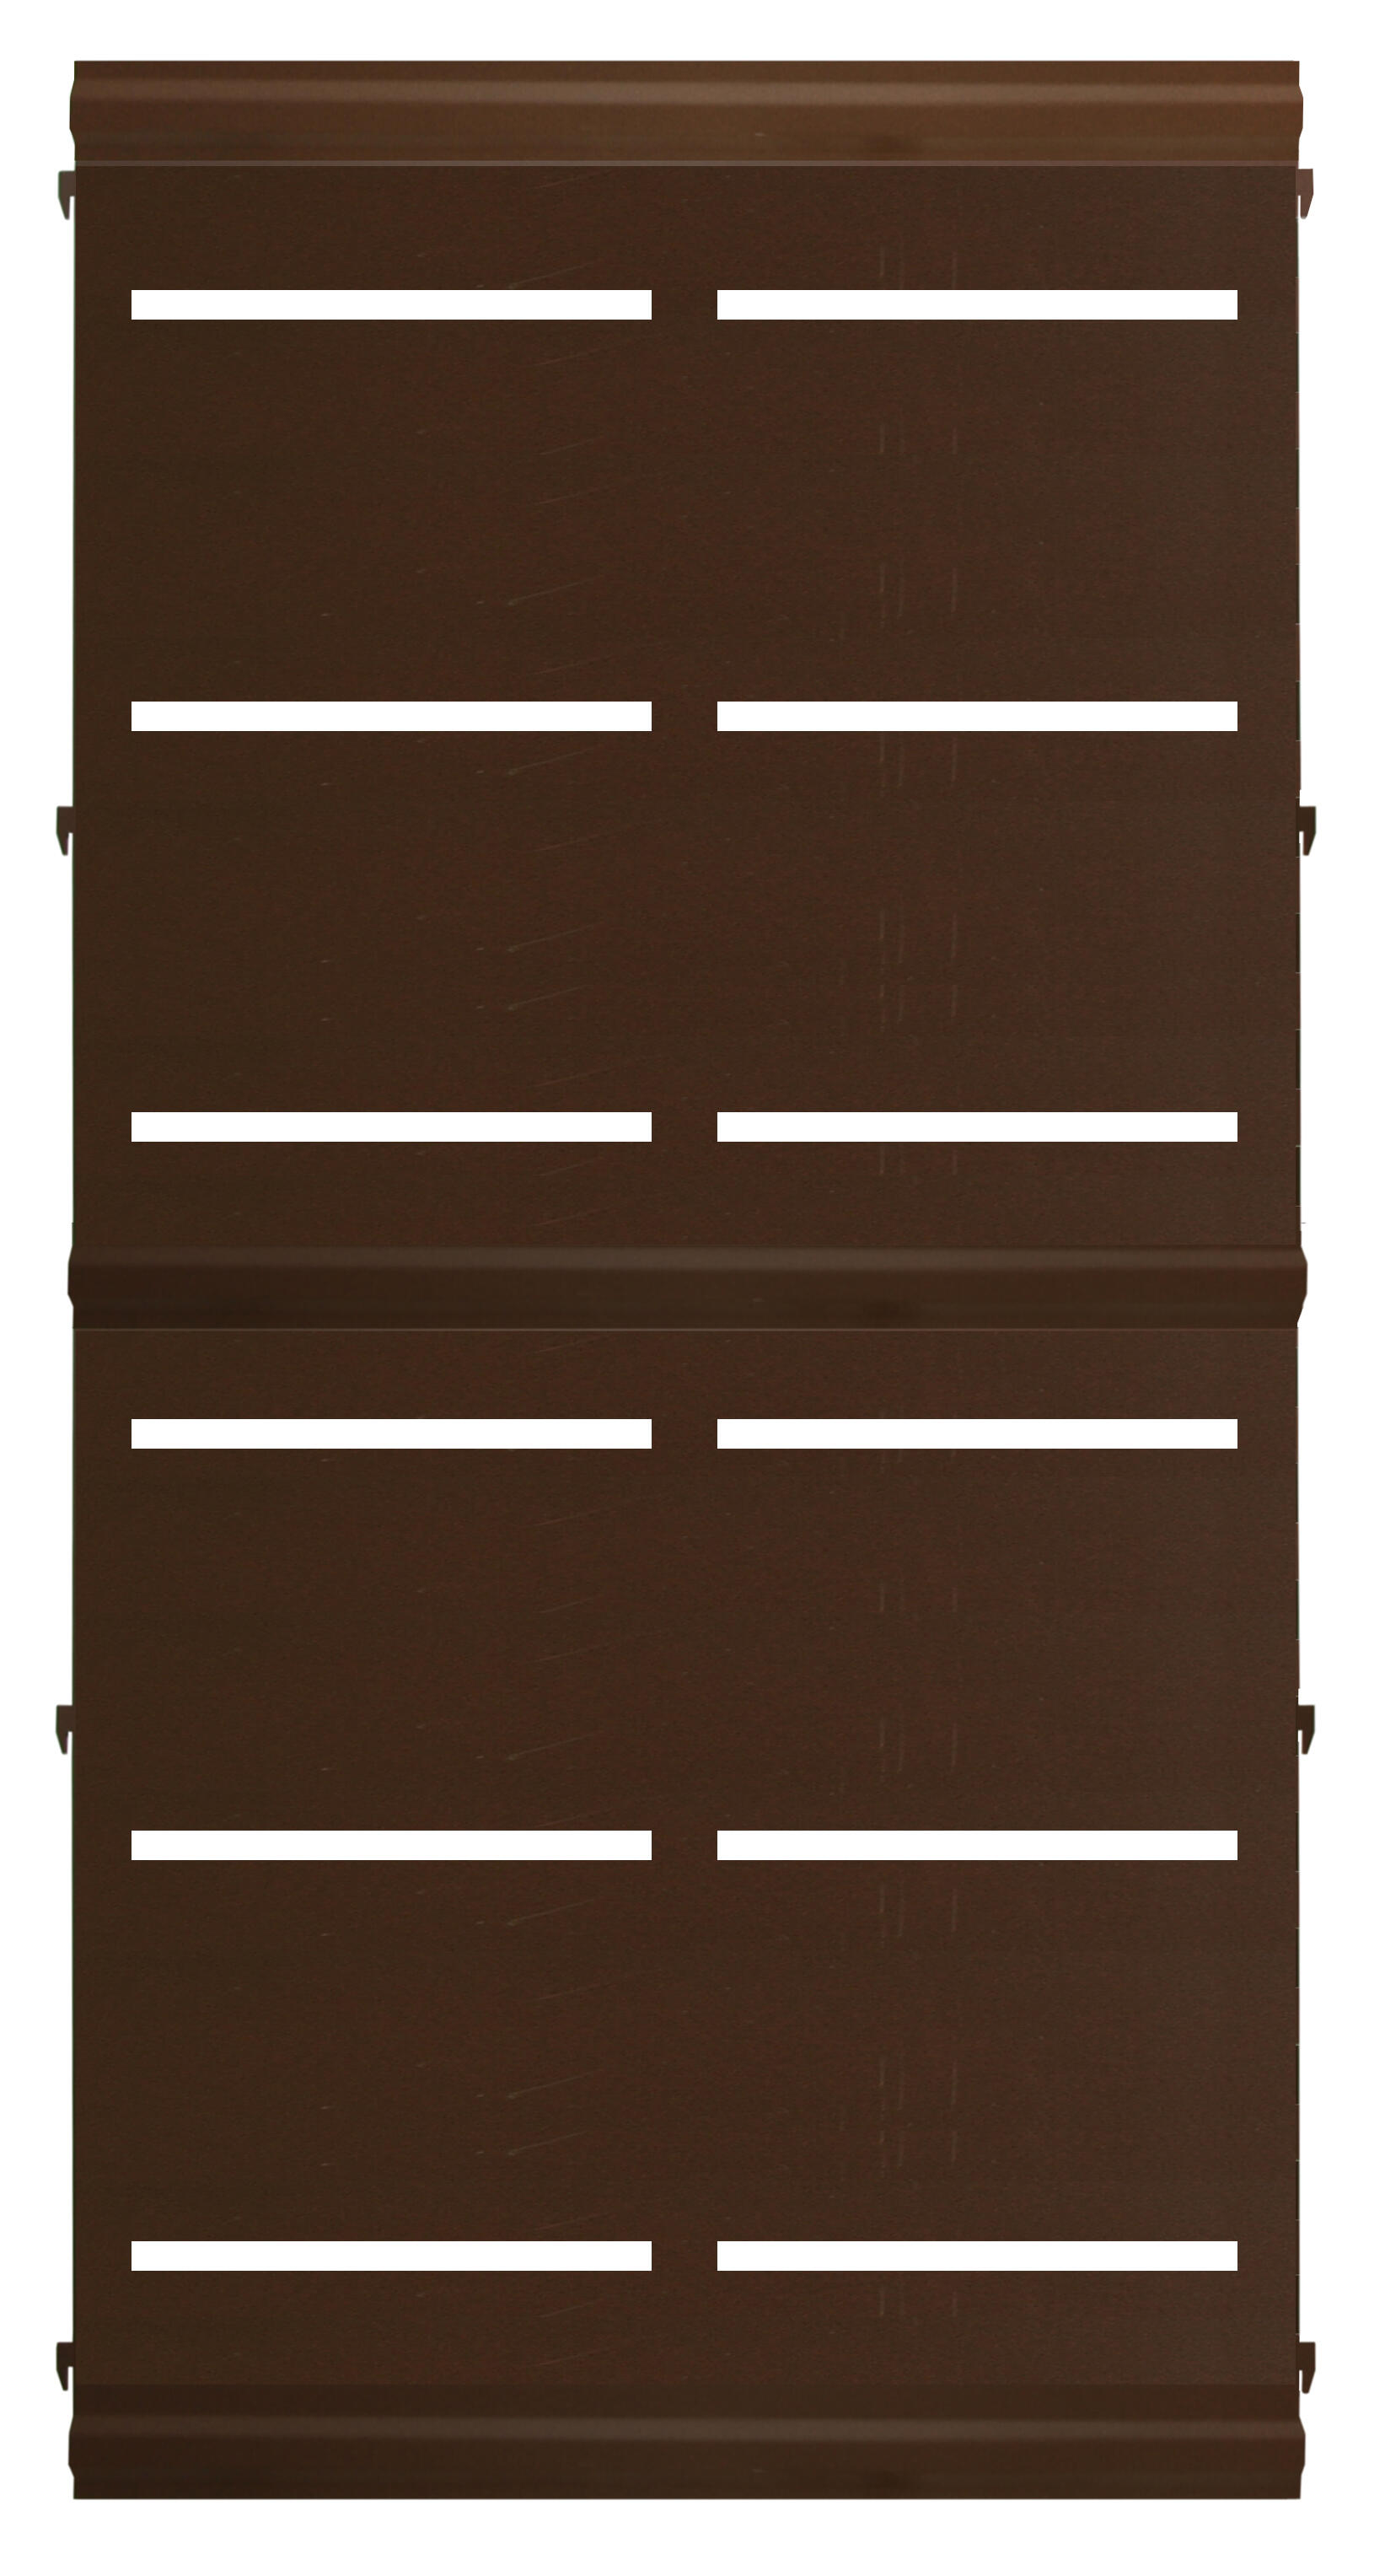 Panel remate valla acero galvanizado franja rayas marrón forja 144x73,5 cm